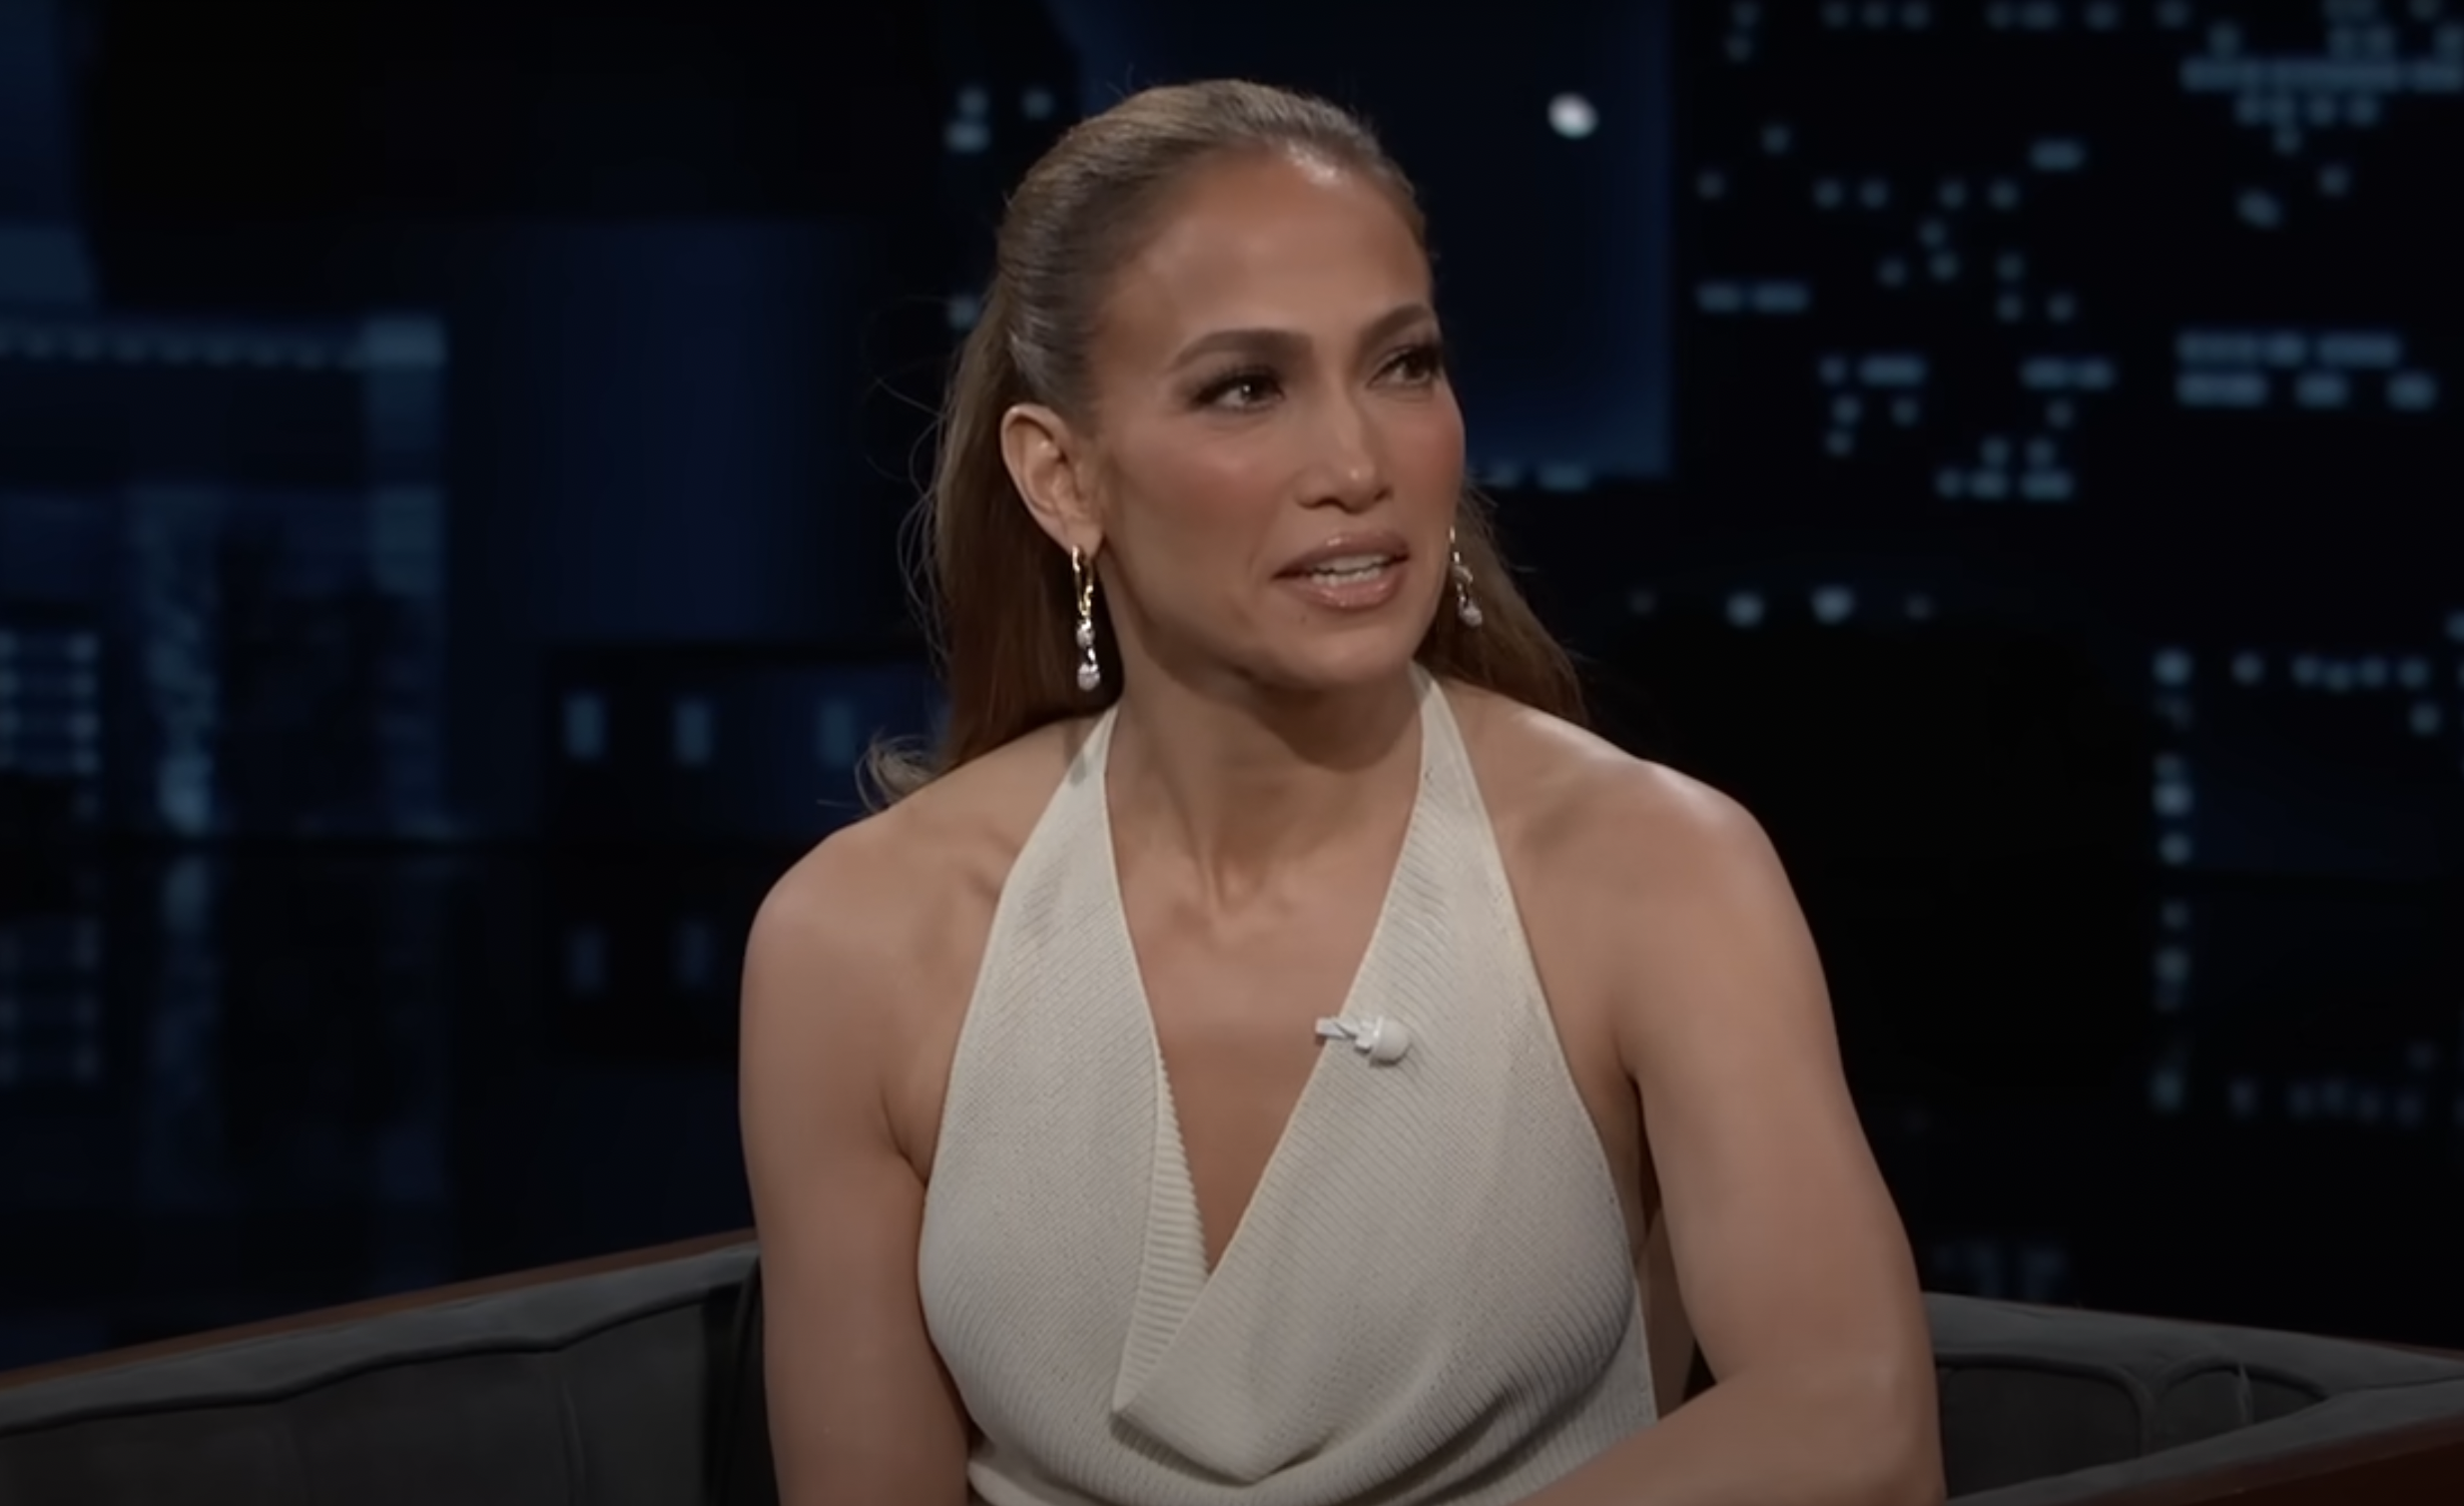 Ben Affleck And Jennifer Lopez Quietly Make Major Life Change Amid Divorce Rumours